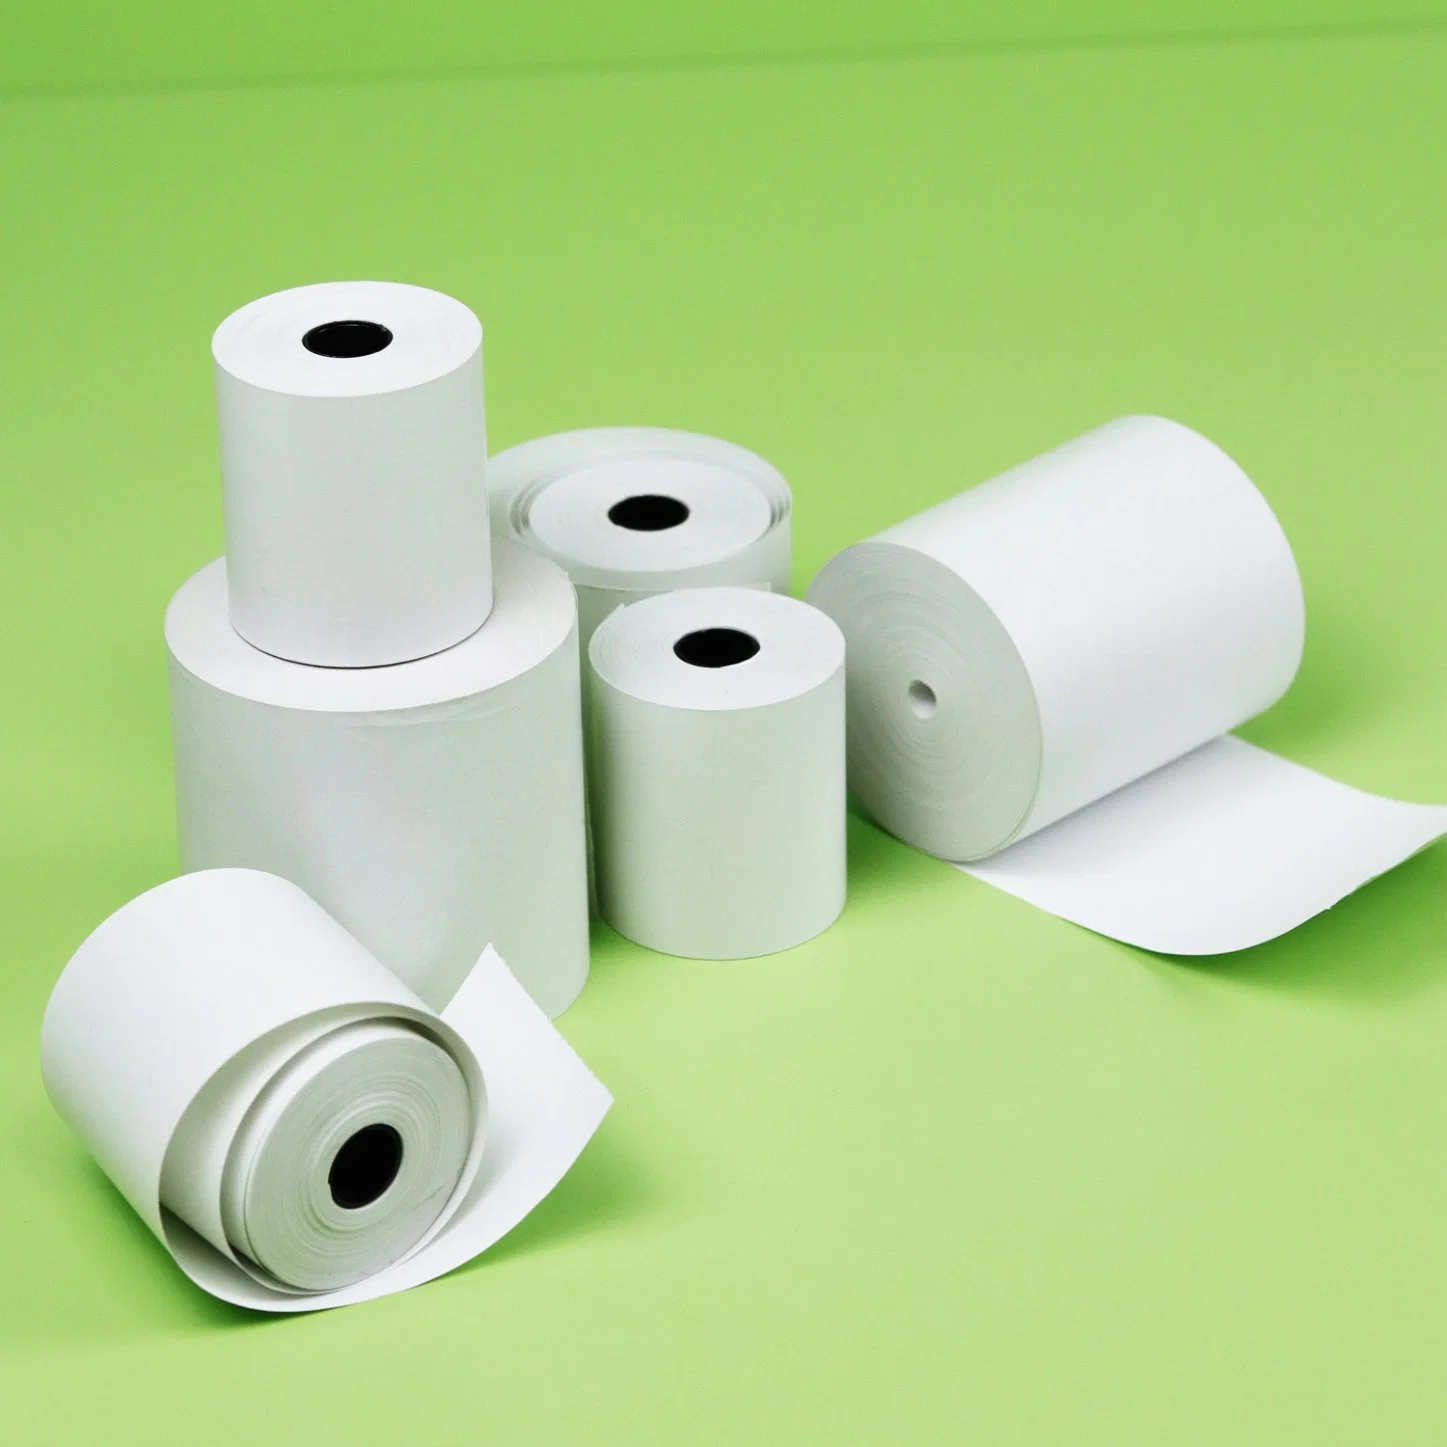 Cash Register Paper Office Receipt Copy Roll 57mm Width Thermal Paper Roll Papel Termico 57*40mm